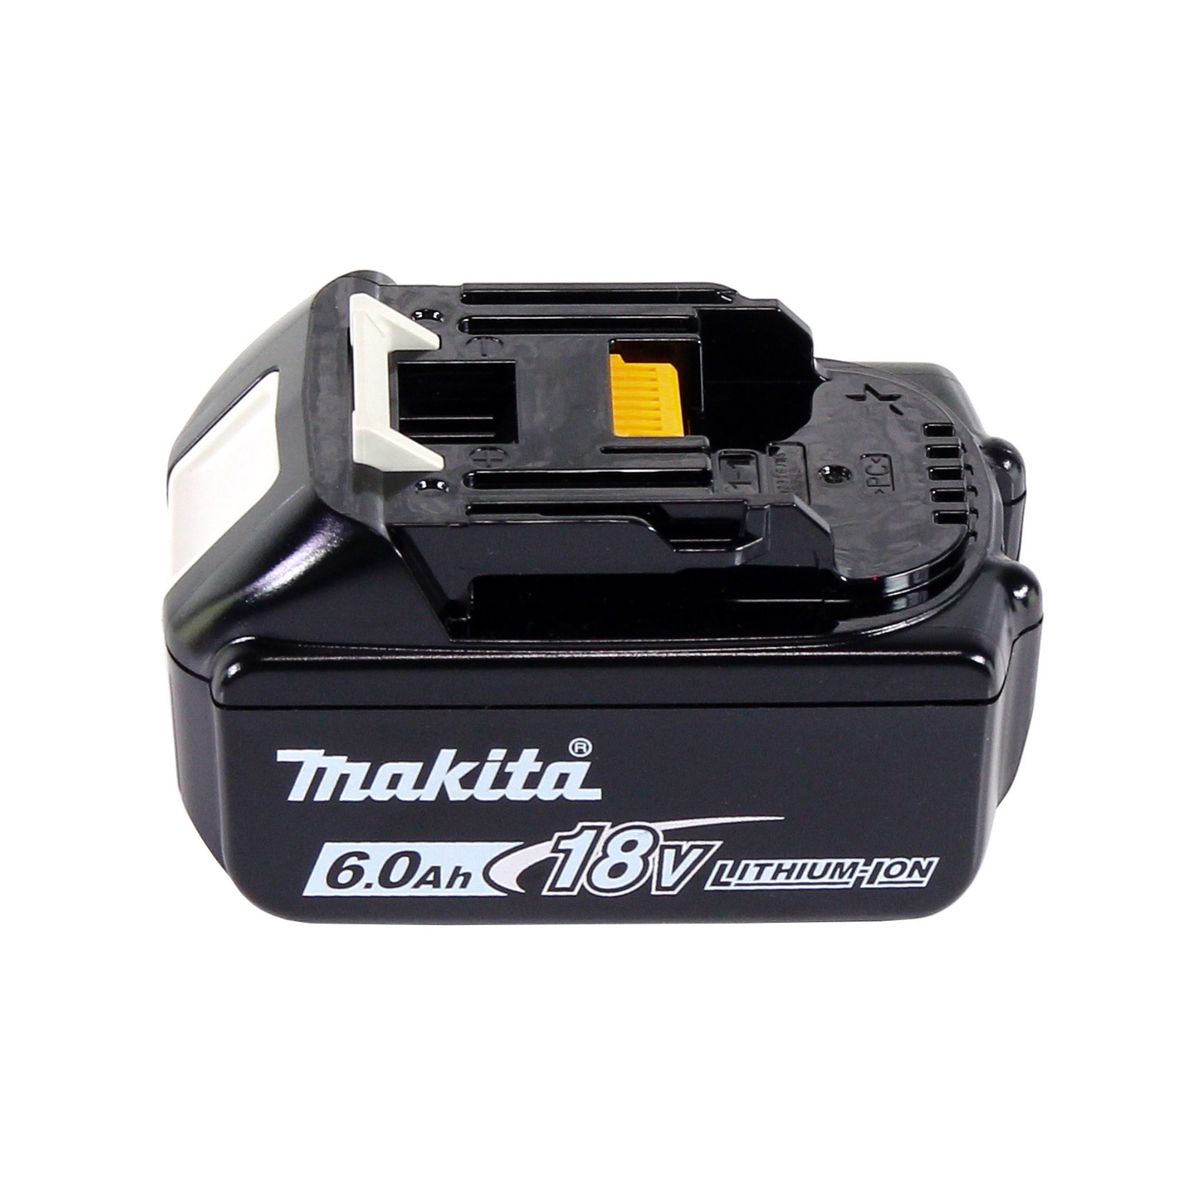 Makita DHP 483 G1J Akku Schlagbohrschrauber 18 V 40 Nm + 1x Akku 6,0 Ah + Makpac - ohne Ladegerät